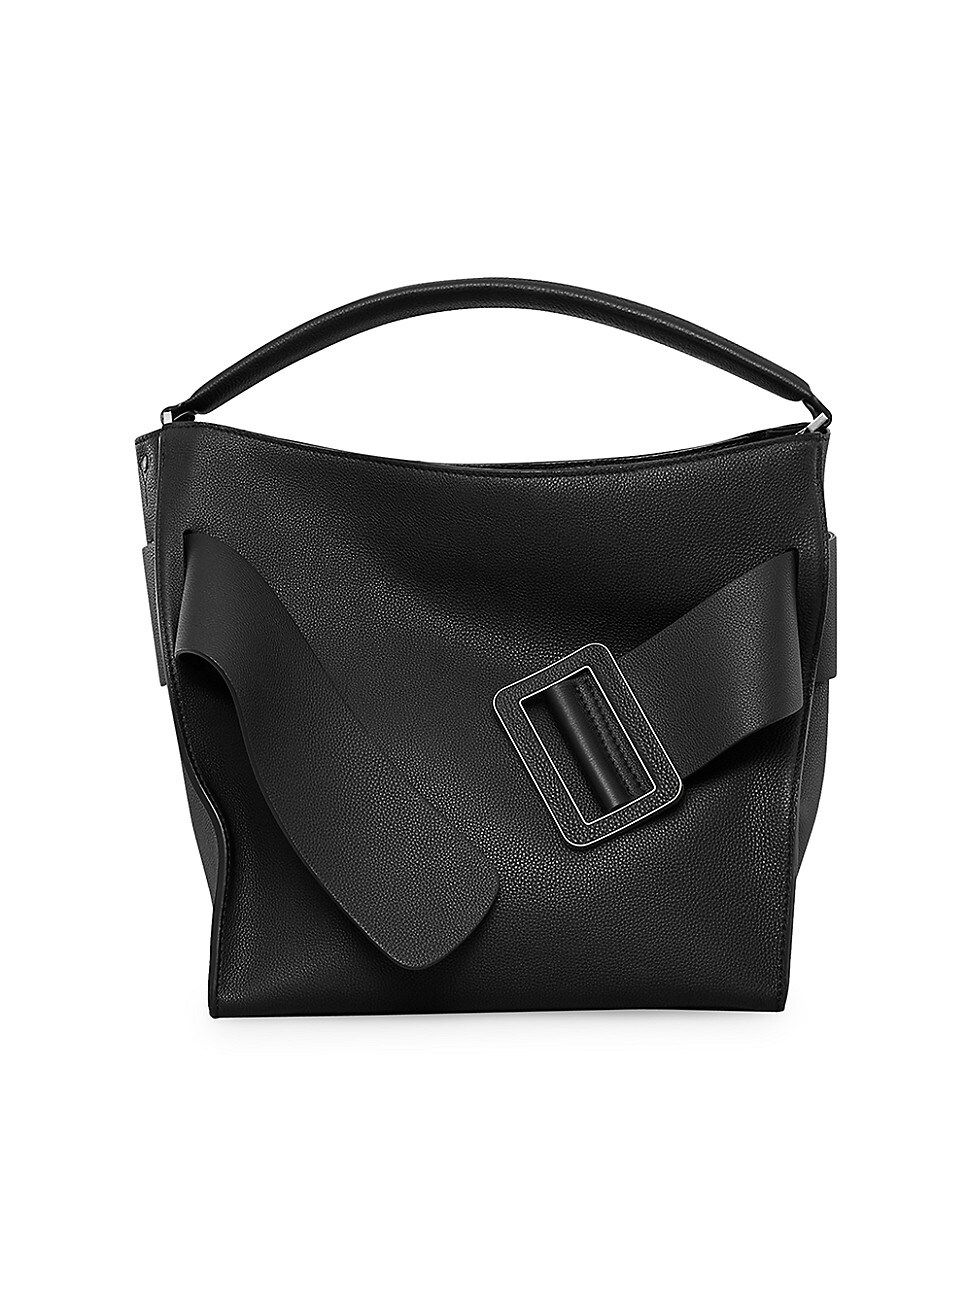 BOYY Devon Leather Hobo Bag | Saks Fifth Avenue